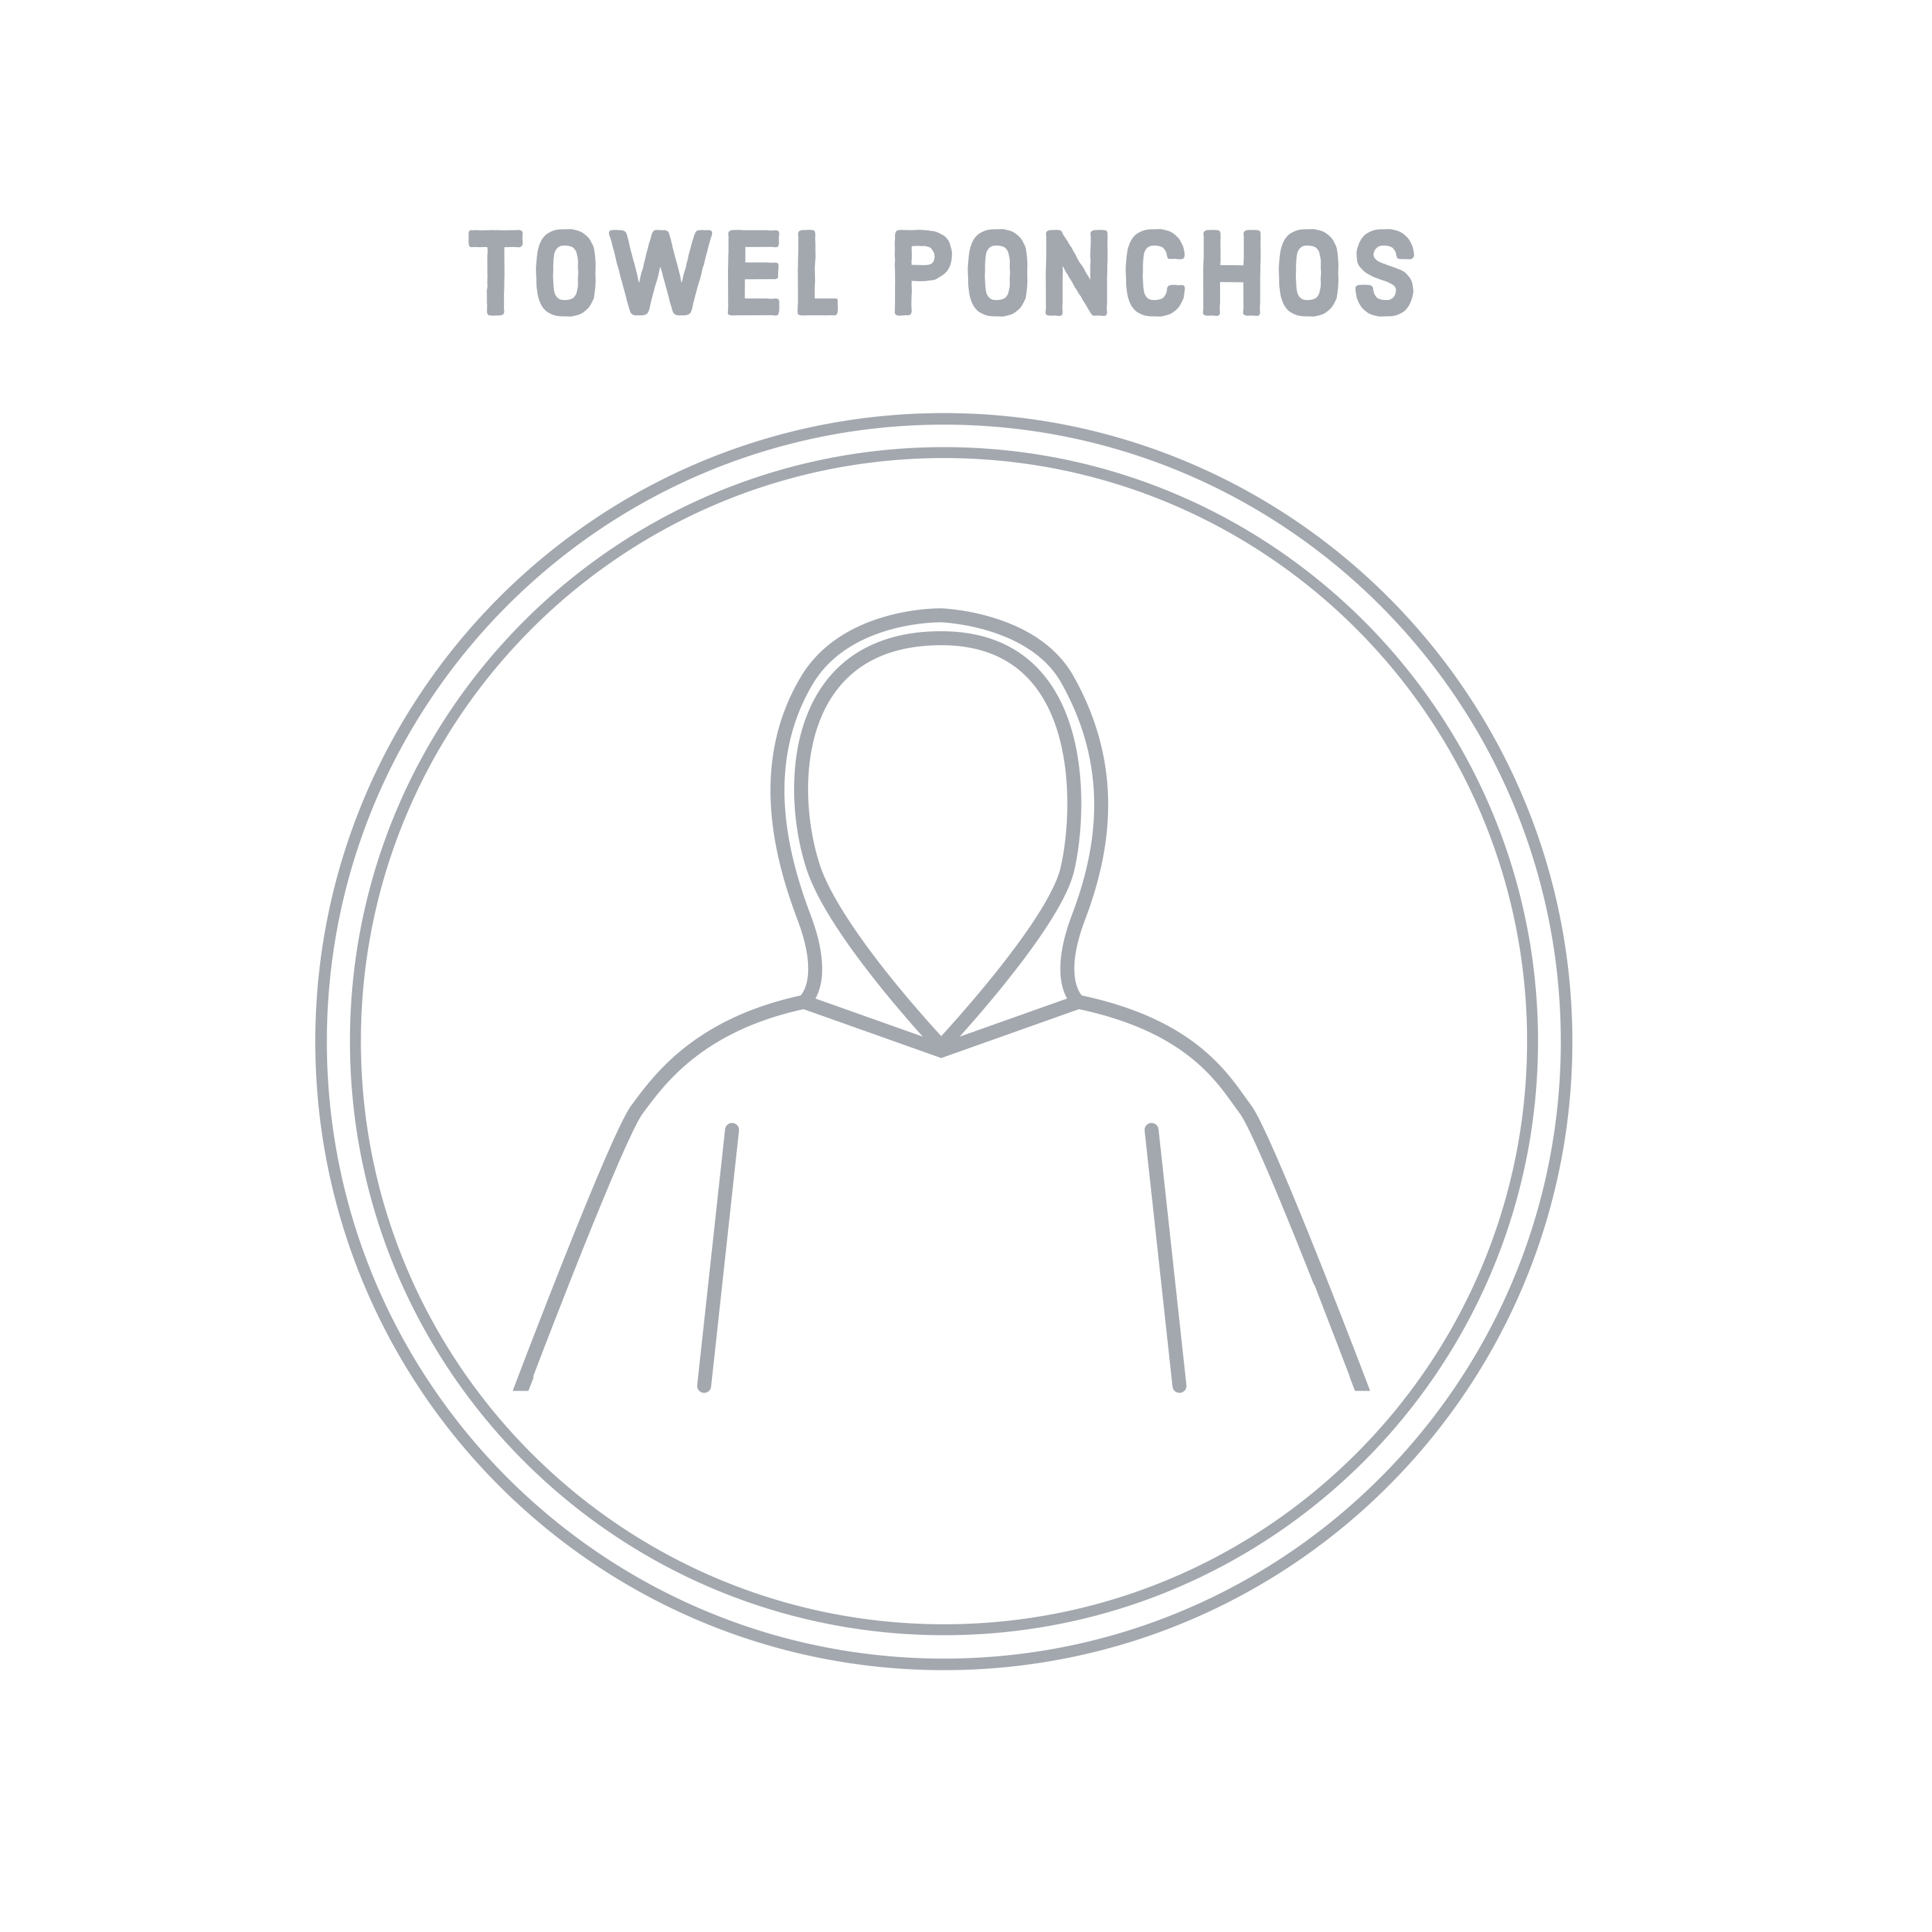 Towel Ponchos